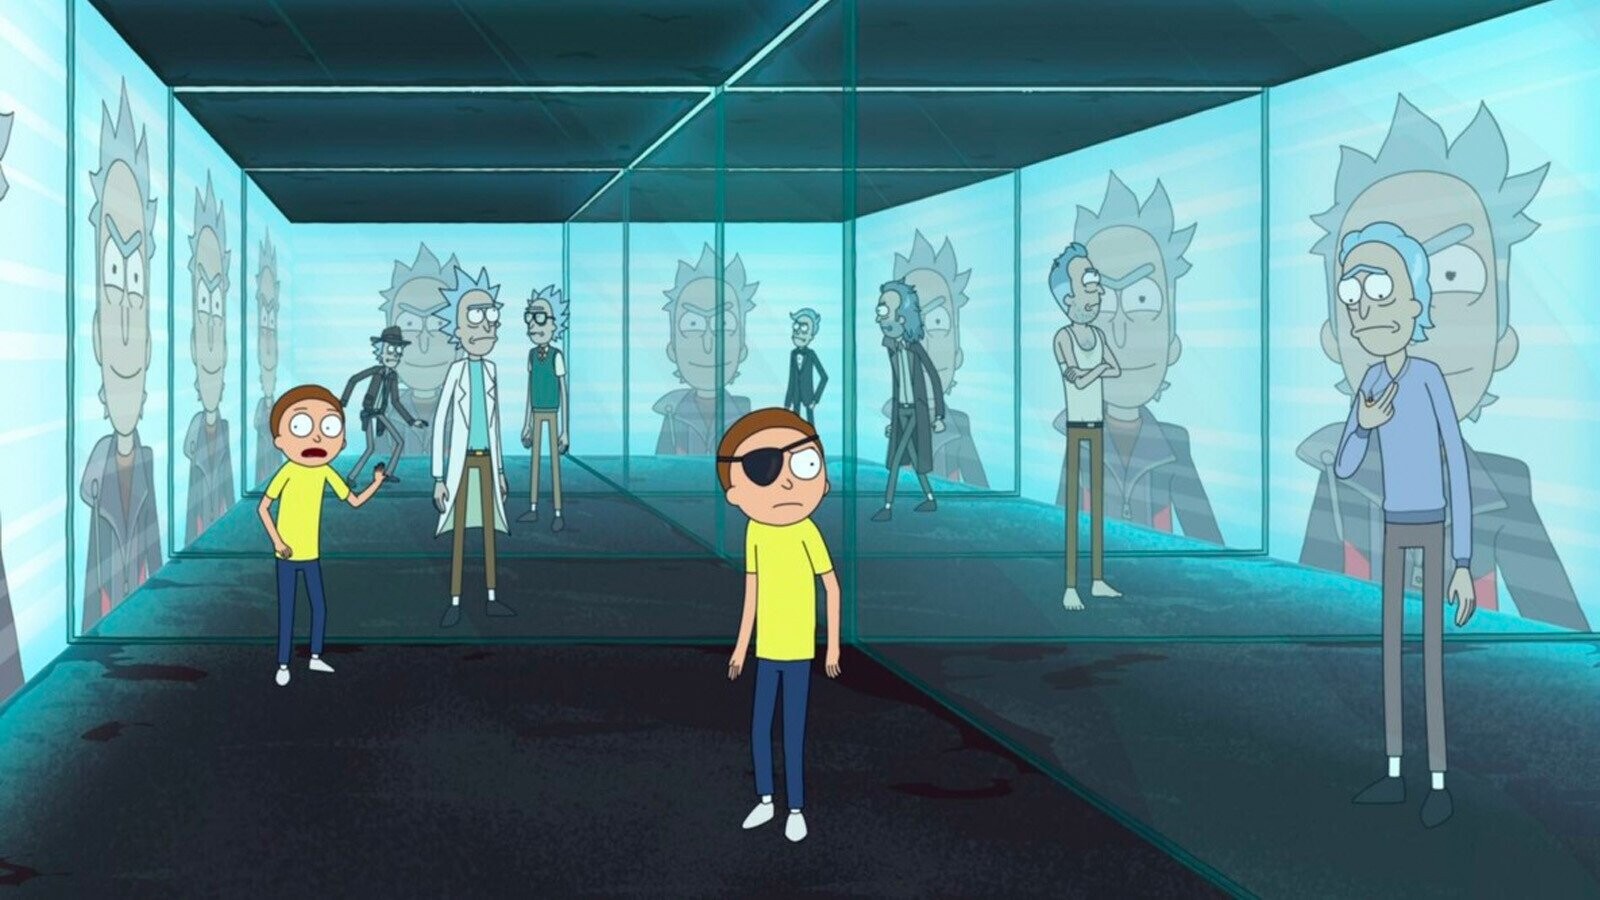 Rick and Morty' Season 5 Finale Recap: Rick's Origin Story Finally